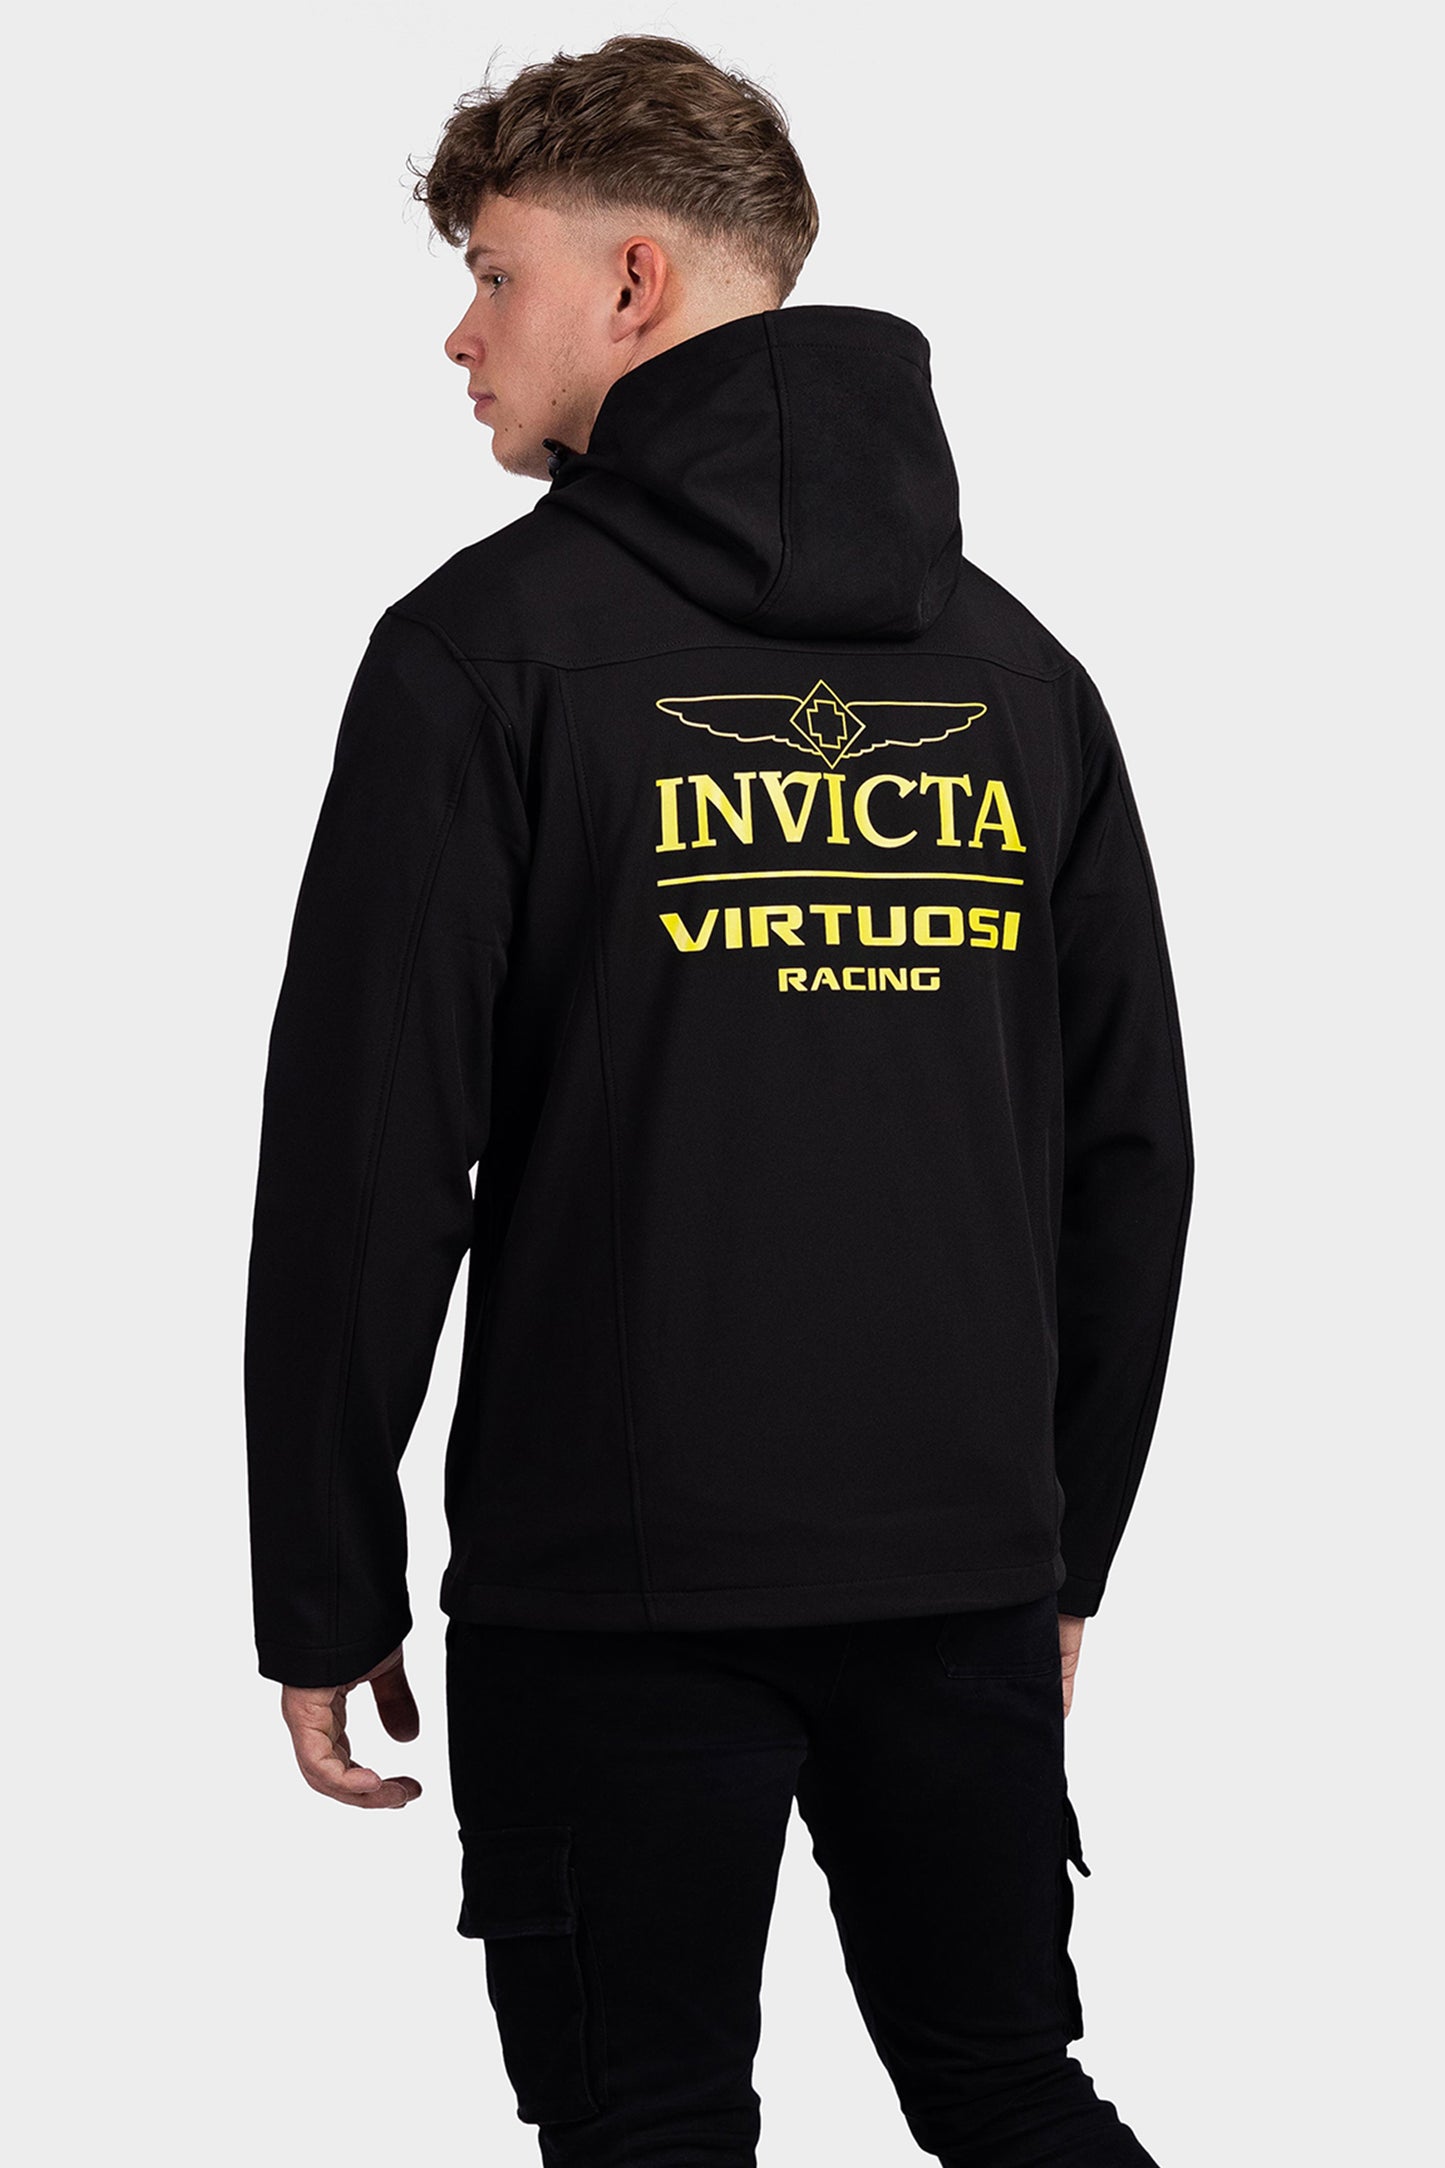 Invicta Racing Team Jacket